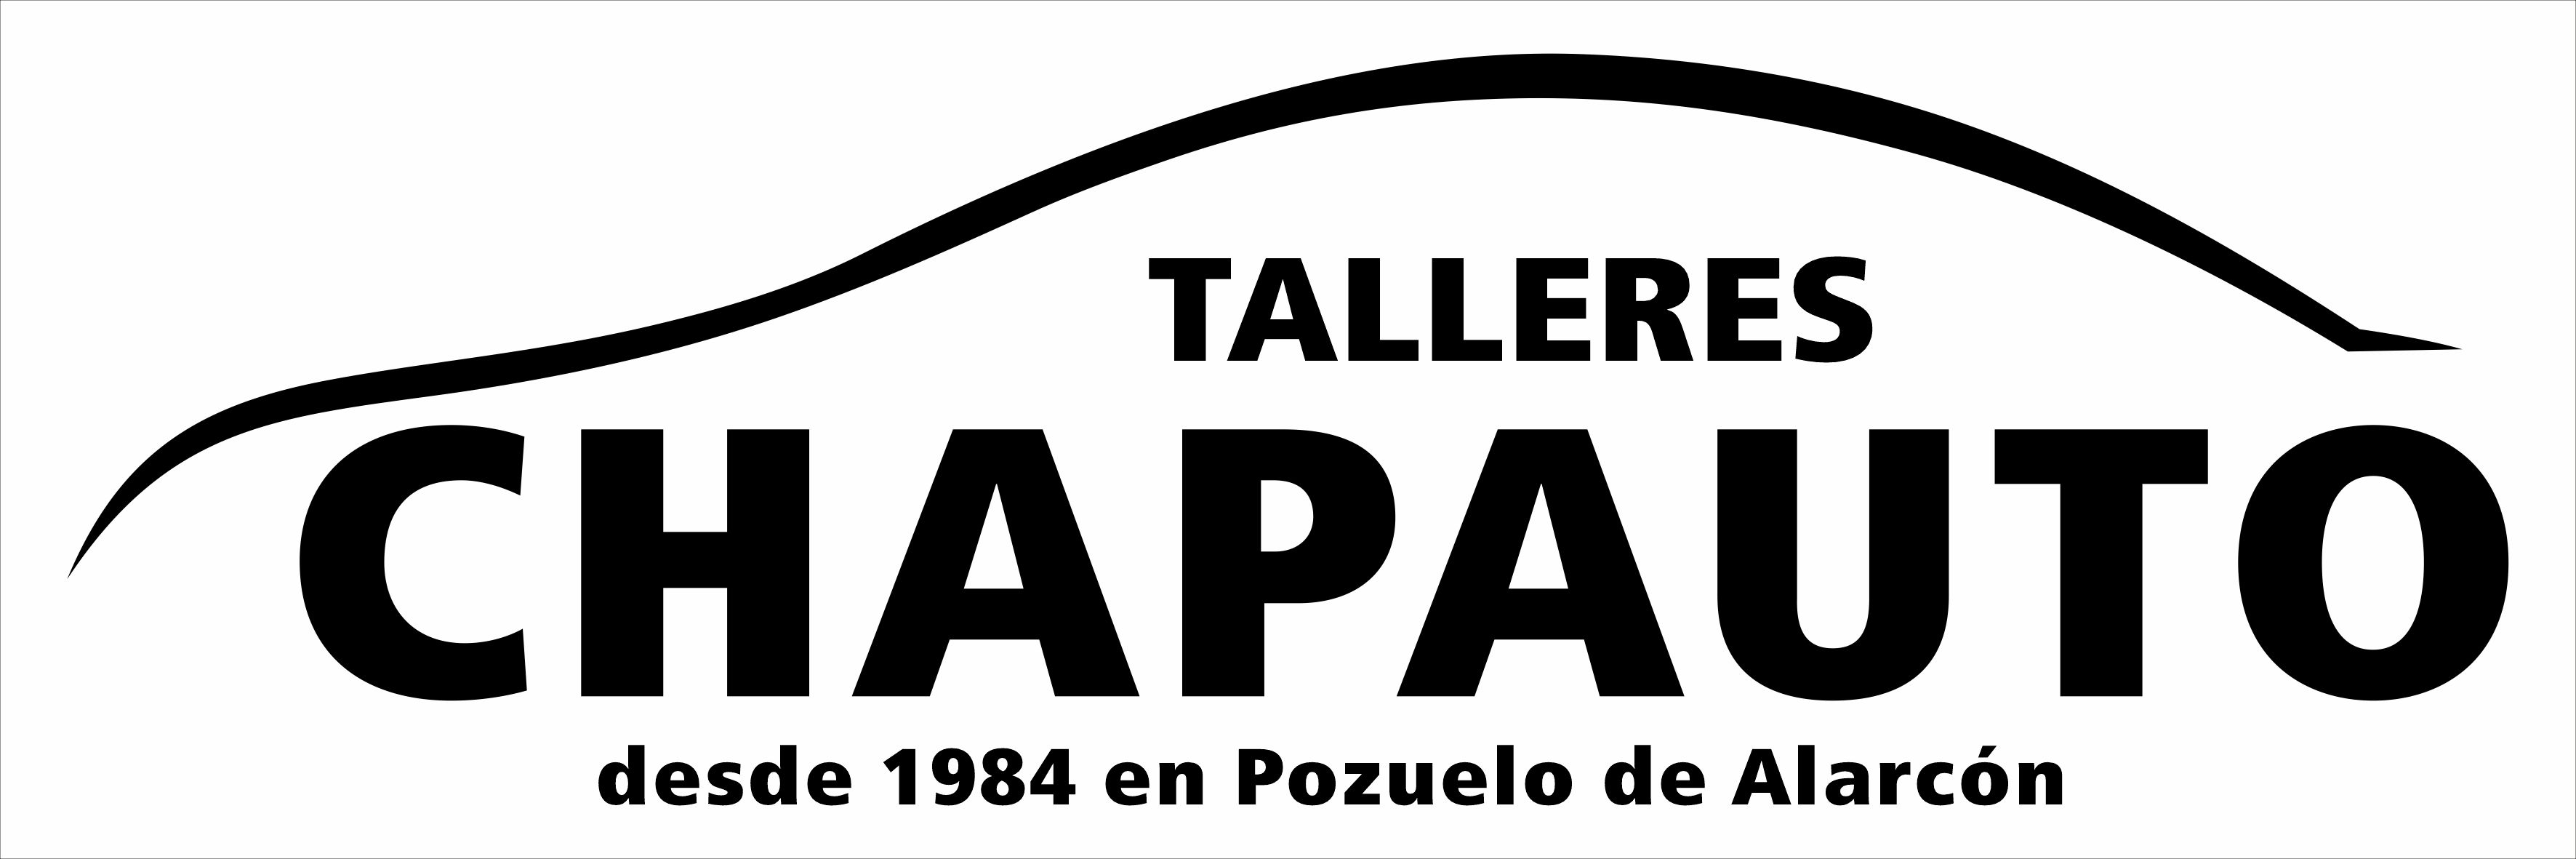 TALLERES CHAPAUTO S.A.